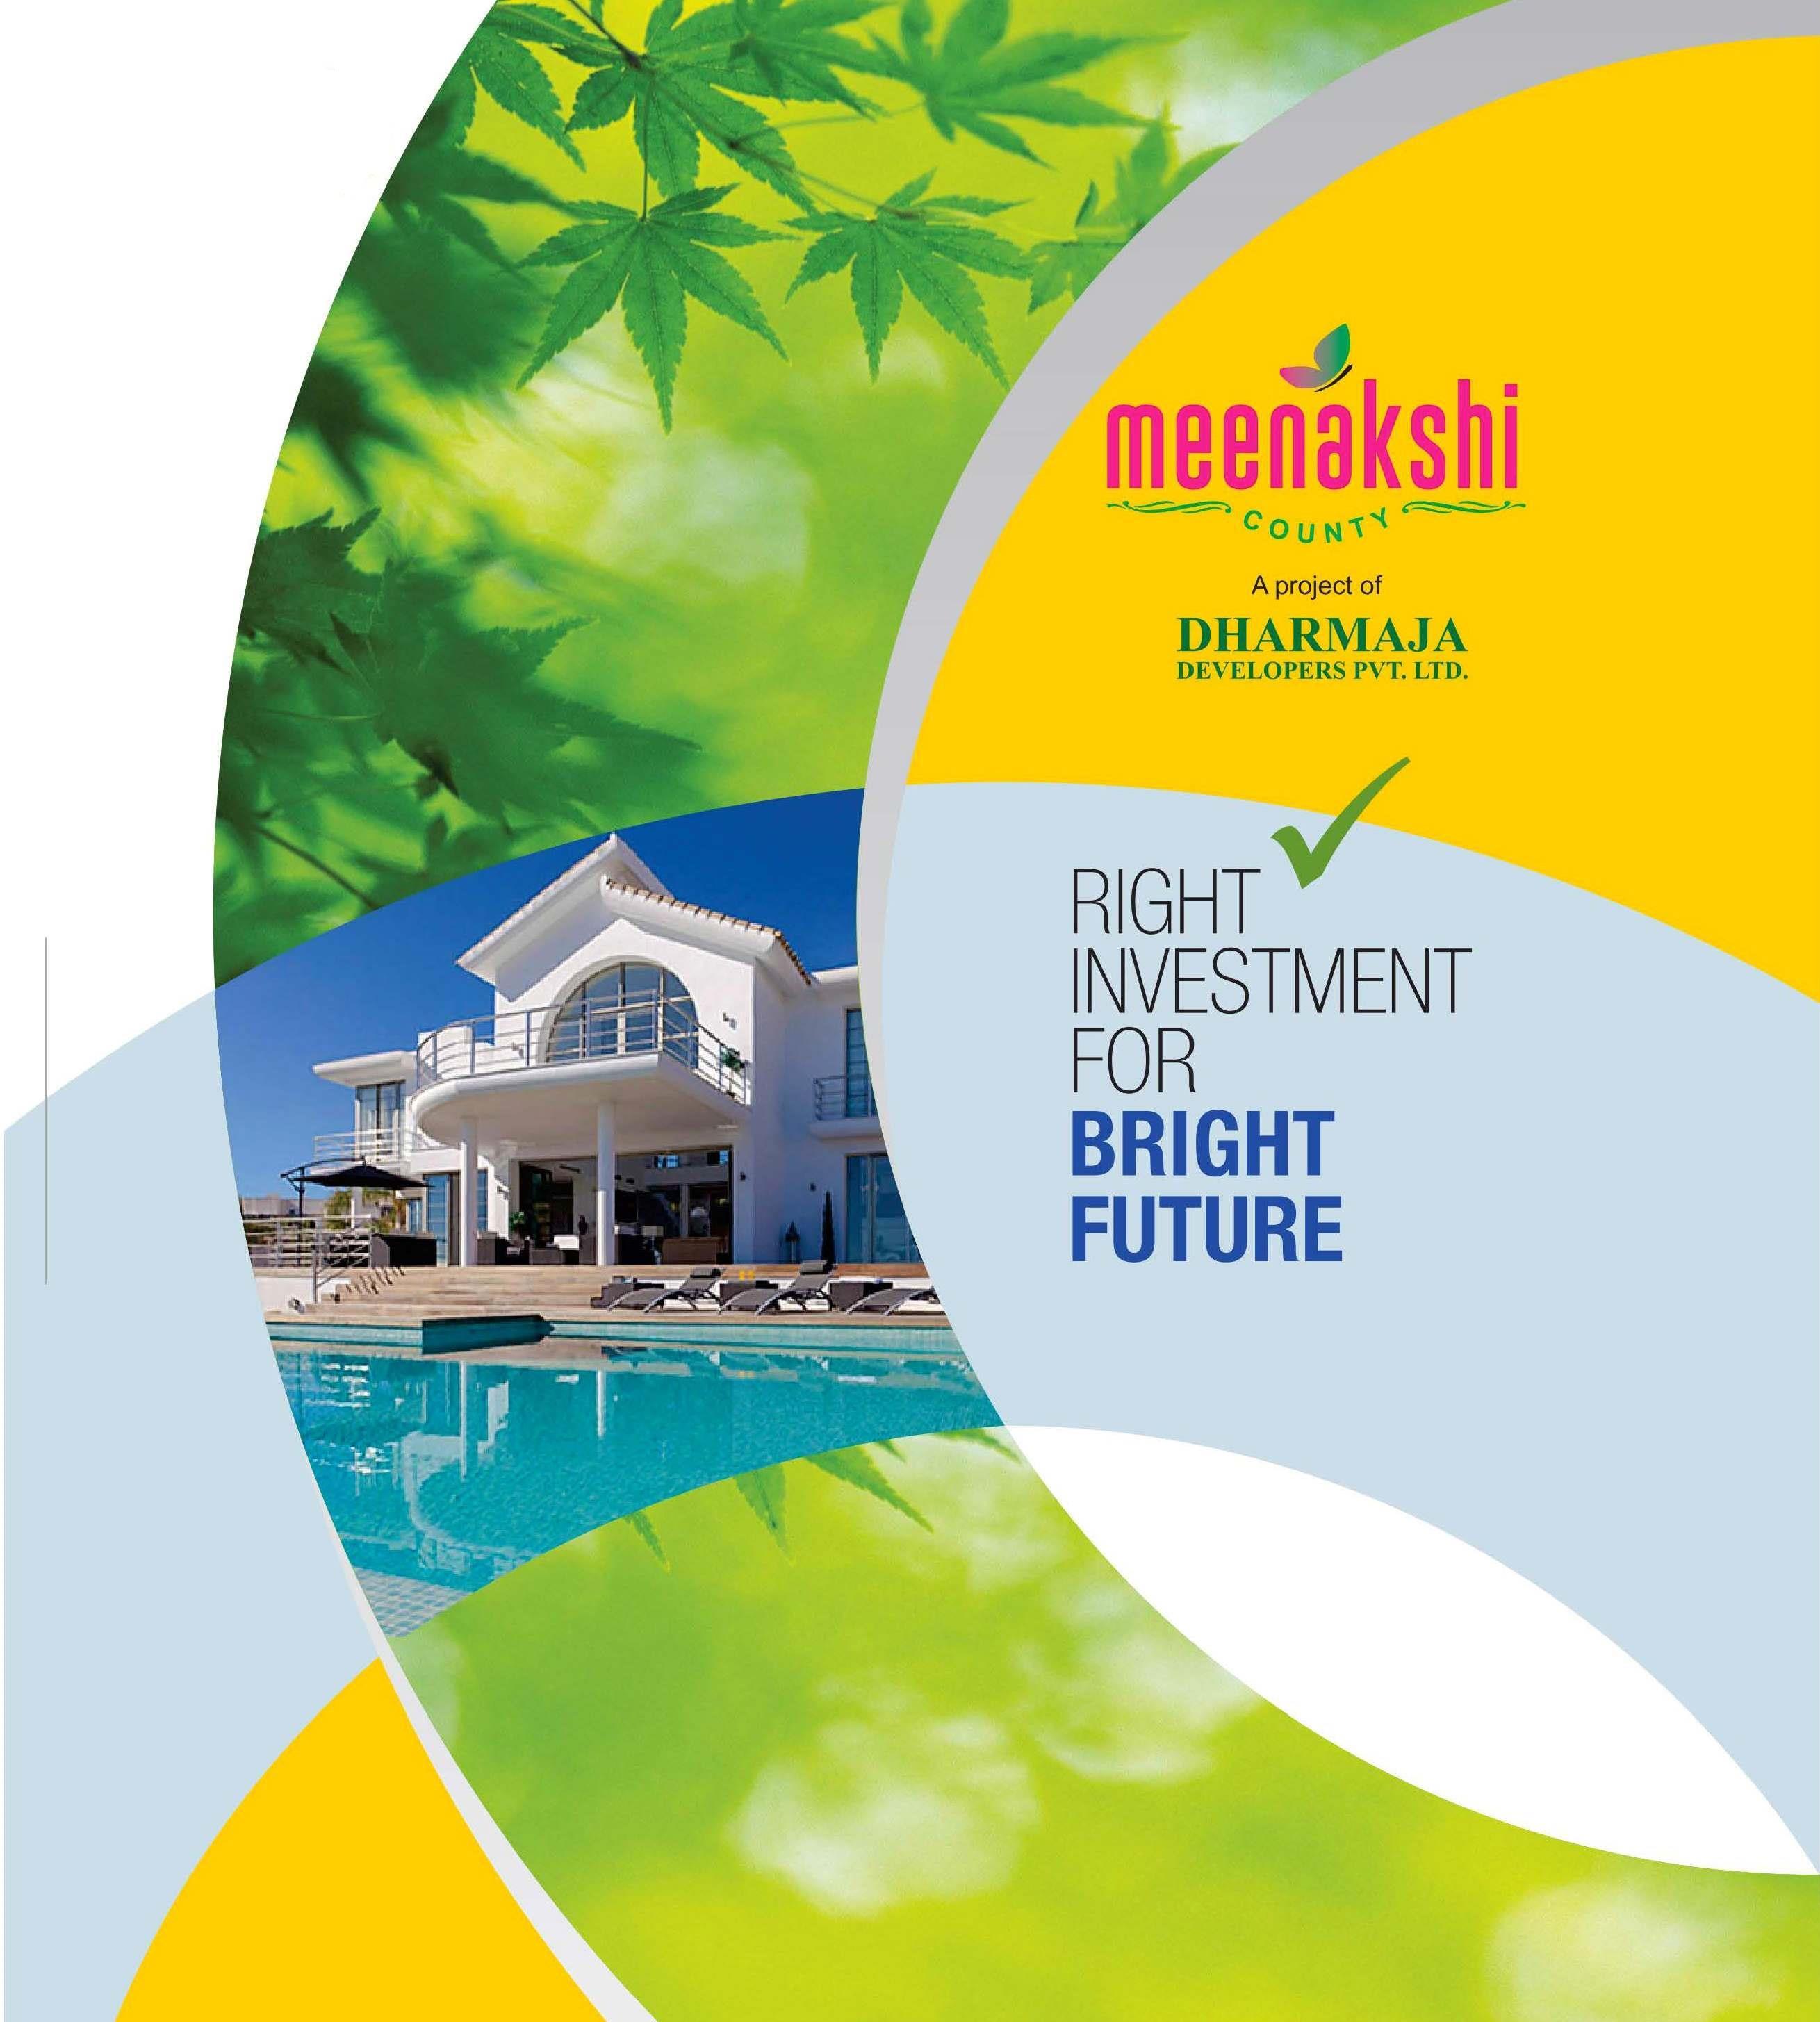 Meenakshi County Brochure Pdf Image